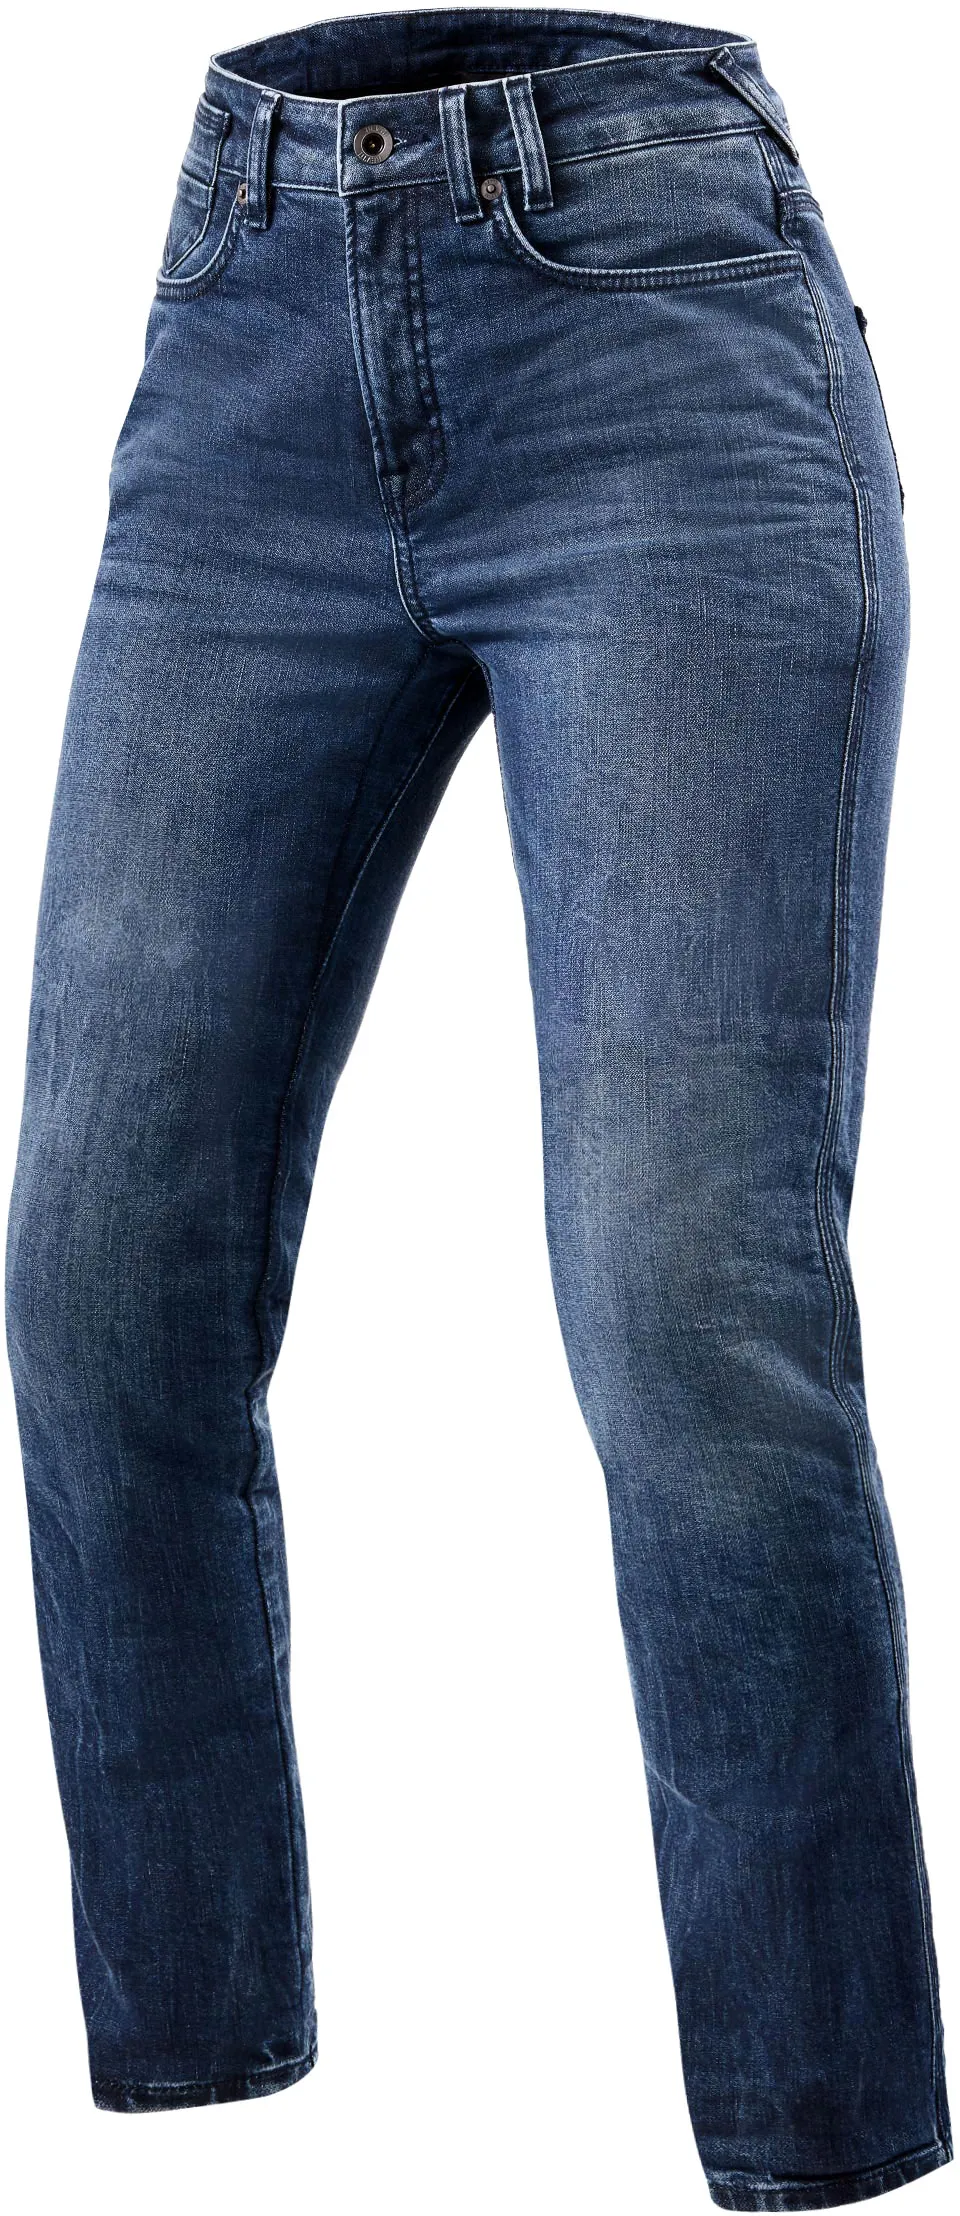 Revit Victoria 2, jeans femmes - Bleu - W32/L32